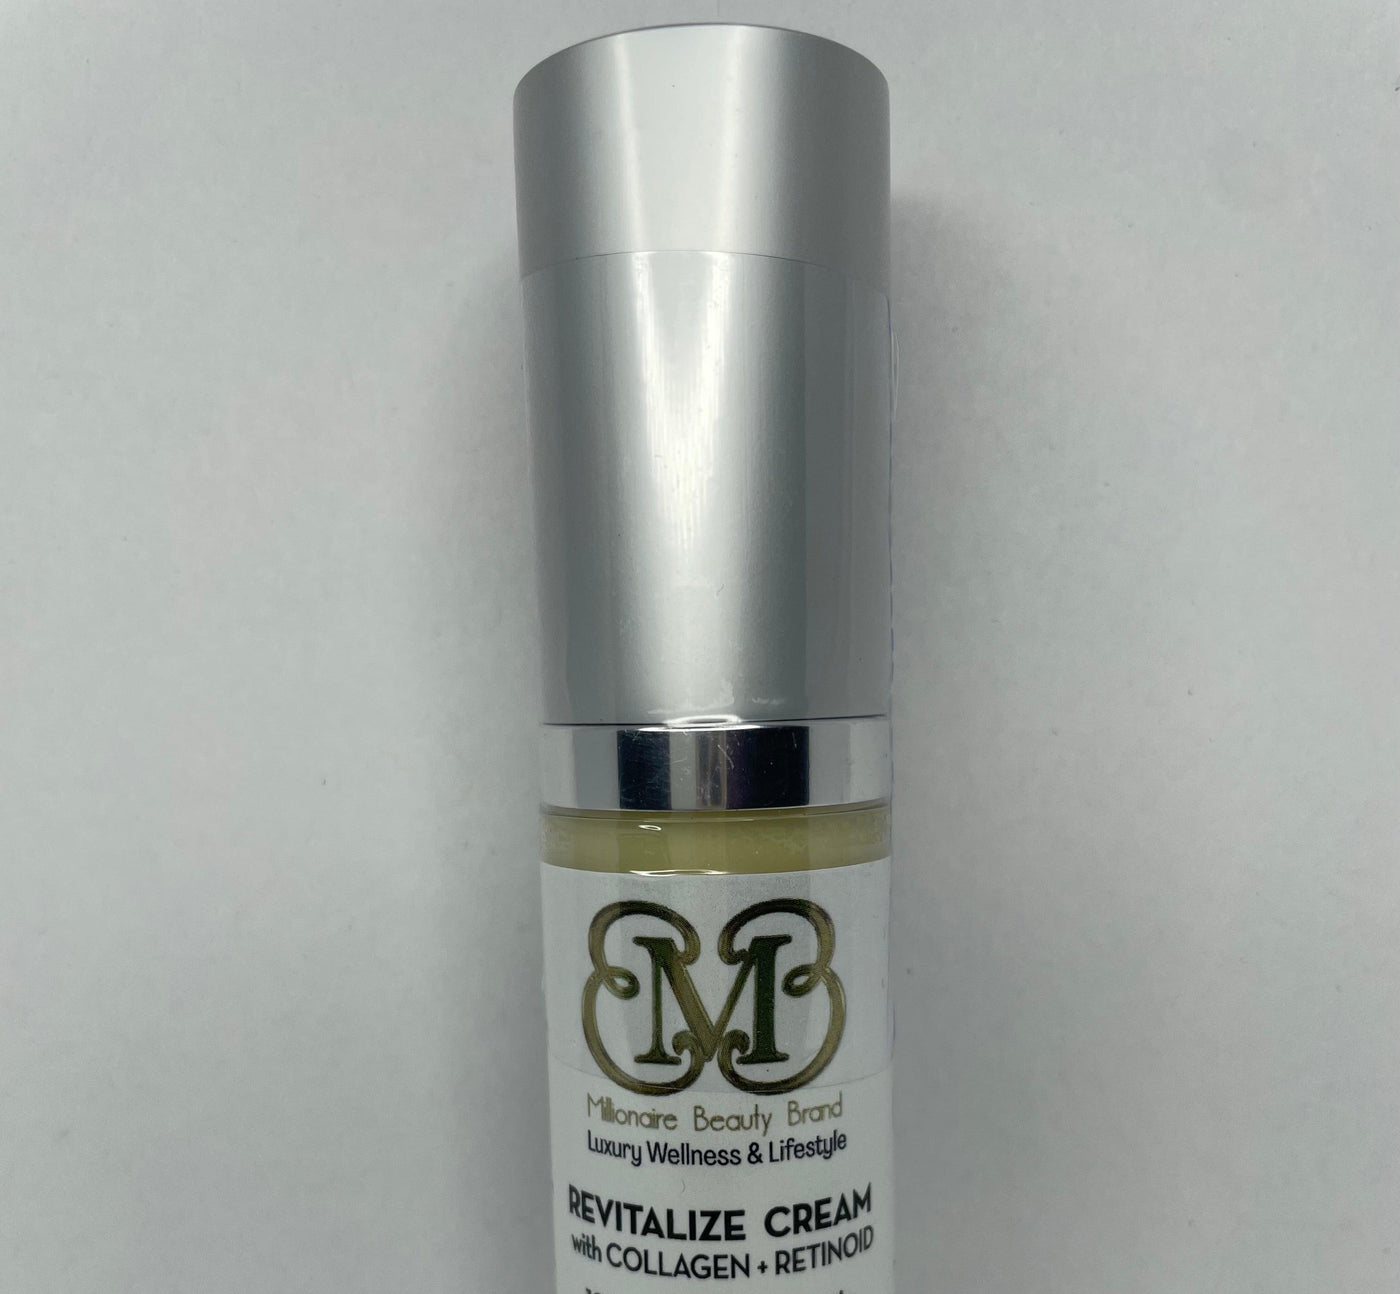 Mbb luxury retinol and collagen serum - Premium Skin Care from Millionaire Beauty Brand Extensions - Just $39.00! Shop now at Millionaire Beauty Brand Extensions 